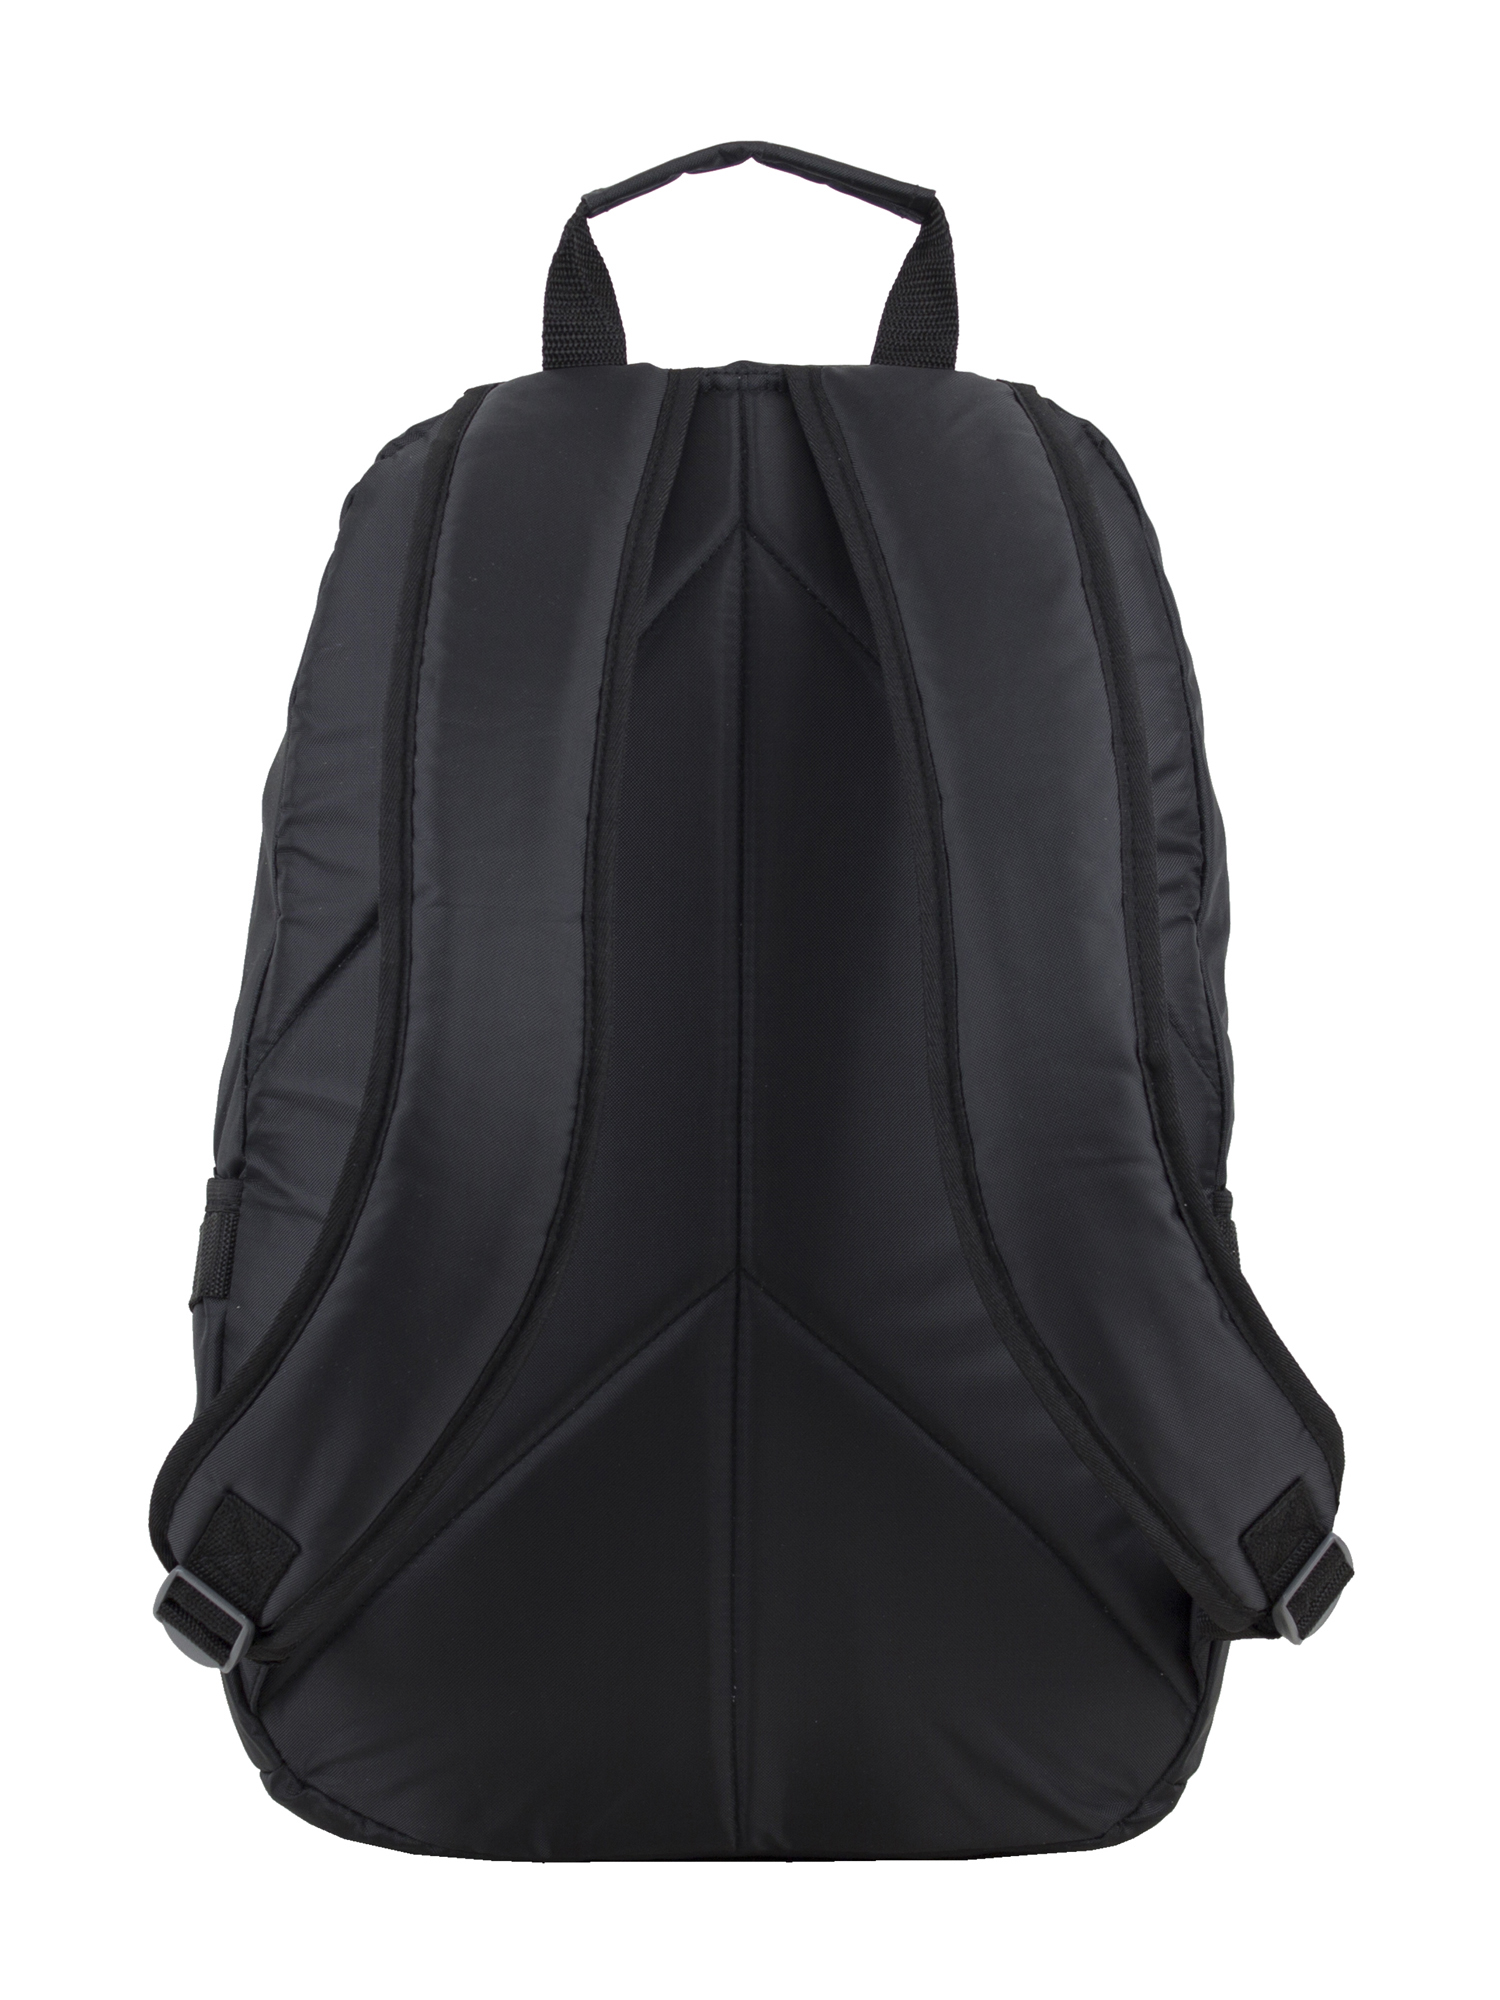 Eastsport Multi-Purpose Dynamic School Black Backpack - image 3 of 6